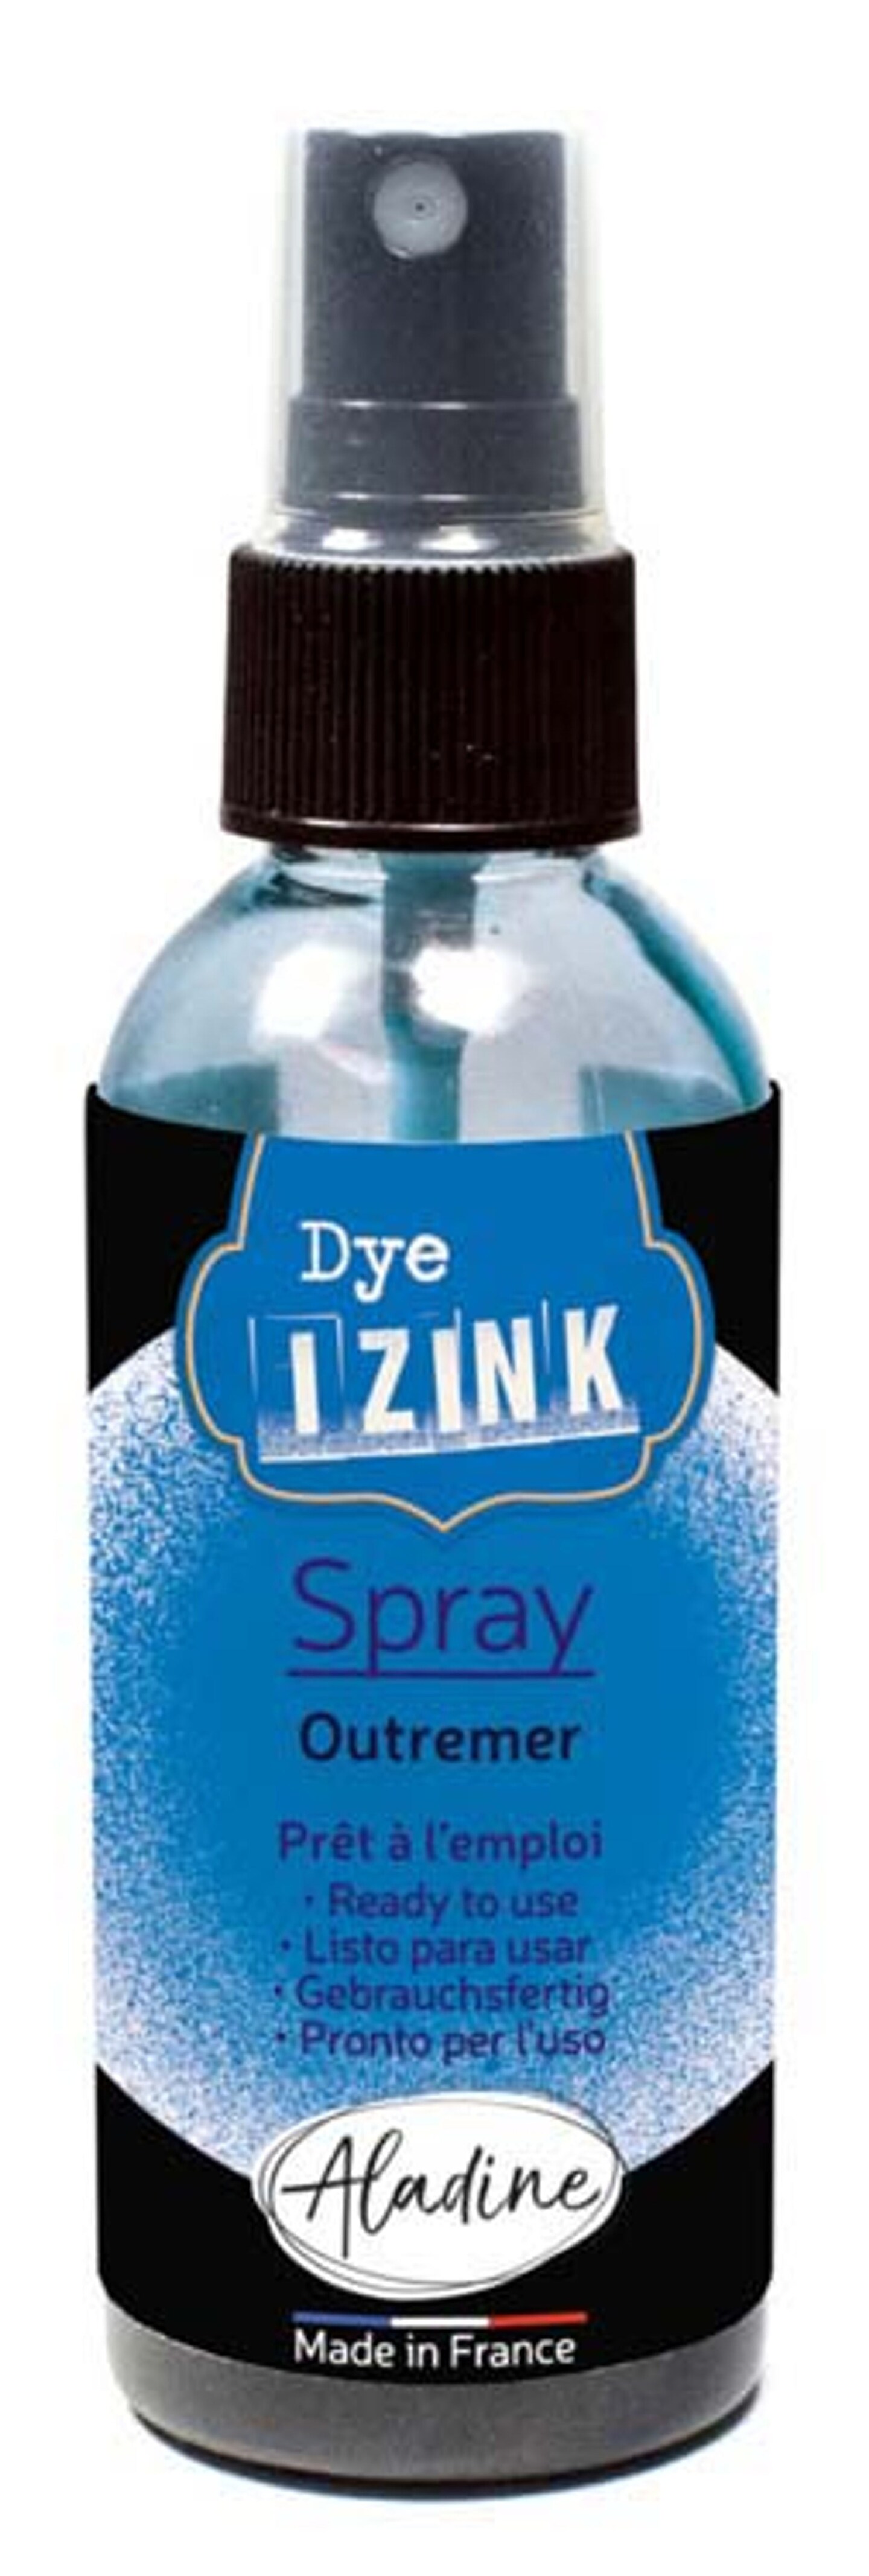 Aladine  IZINK Dye Ink Spray - Outremer